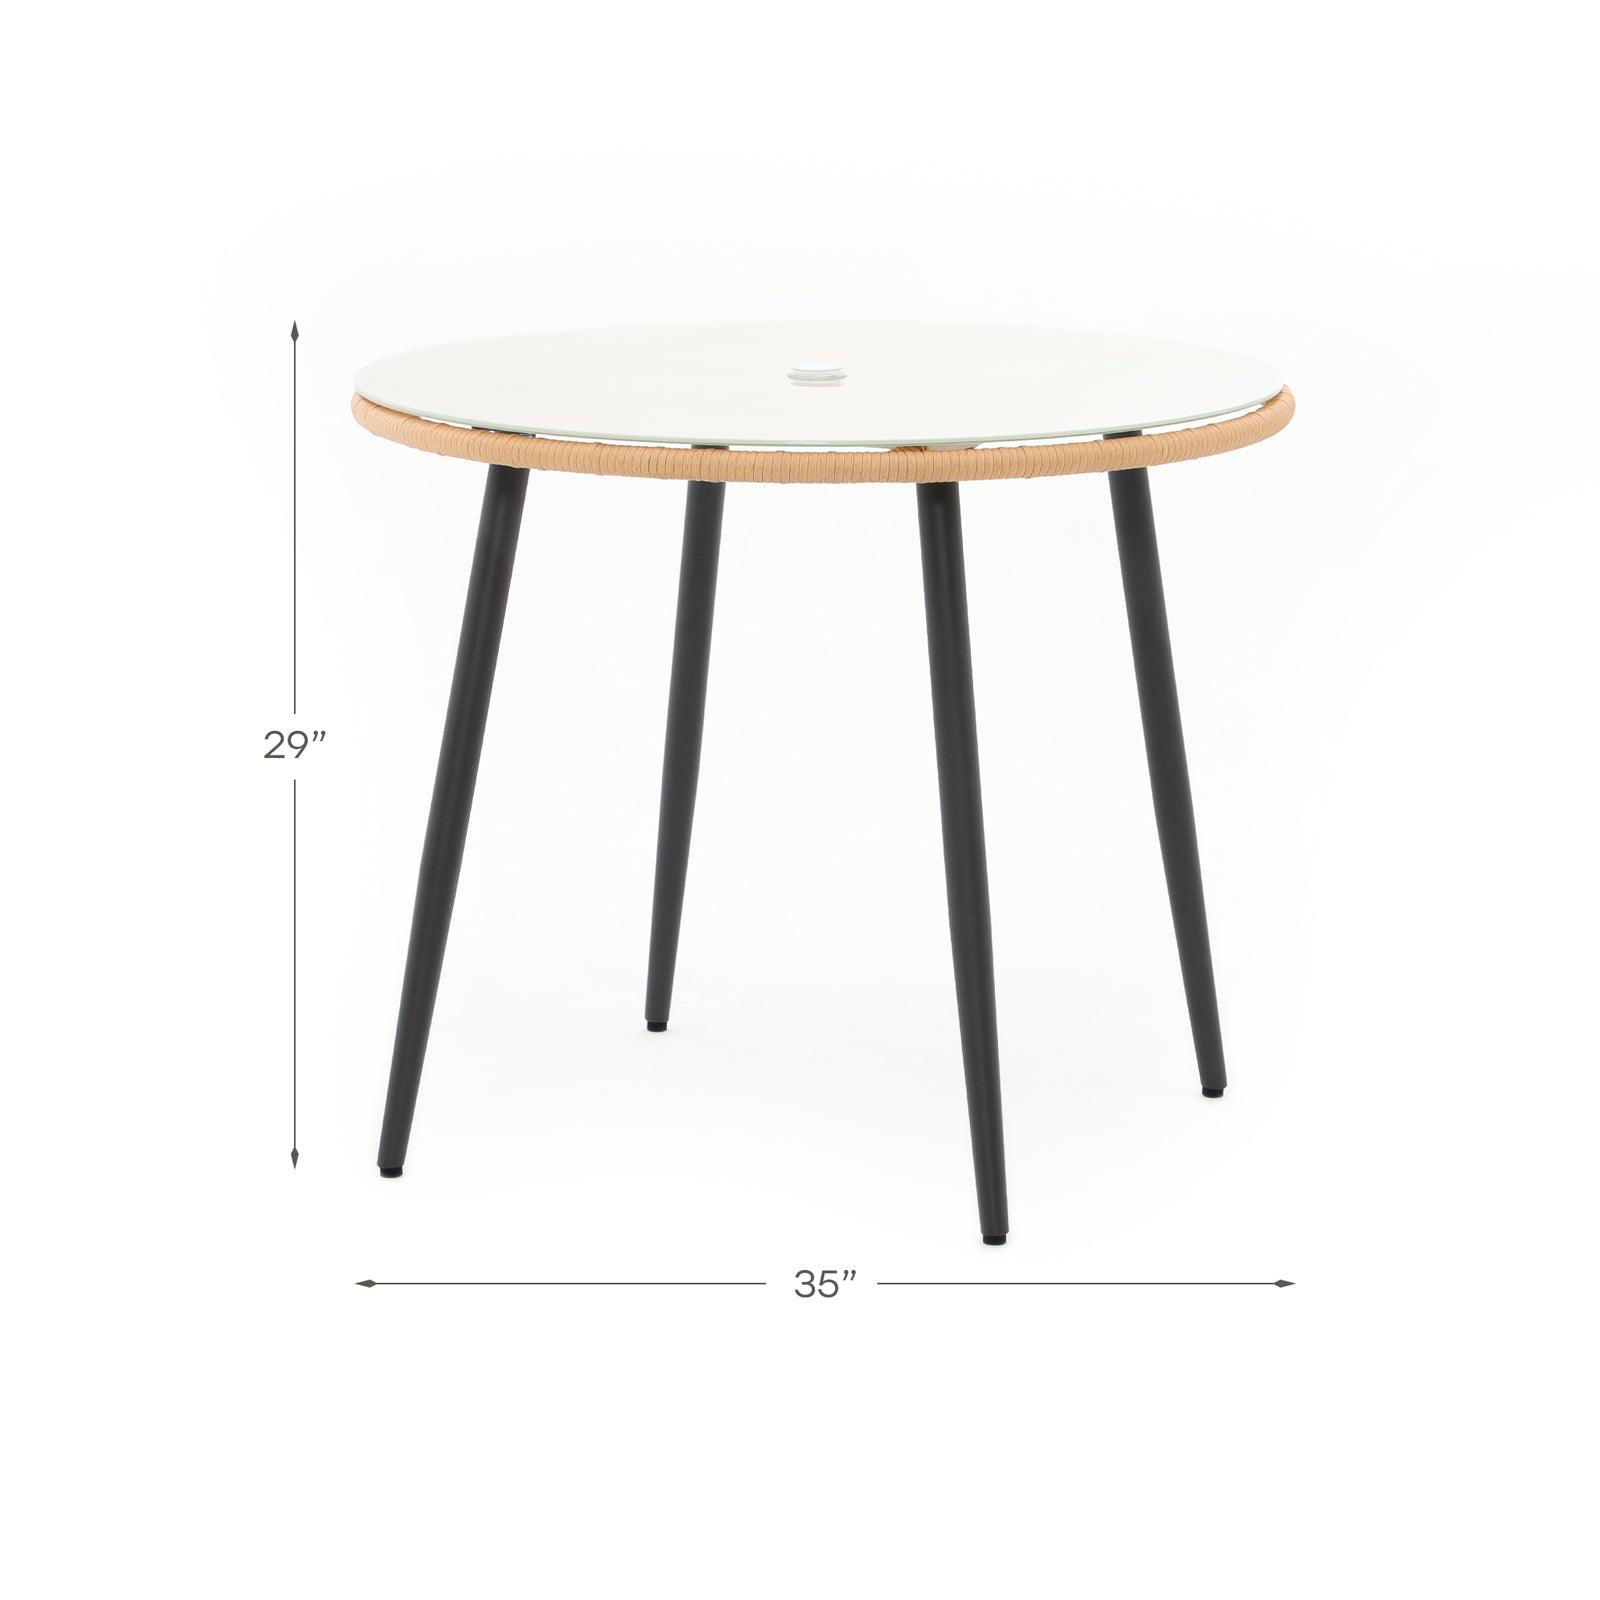 Menorca Dining Table, Round Shape, Wicker Design, Tempered Glass, Dimension Information- Jardina Furniture